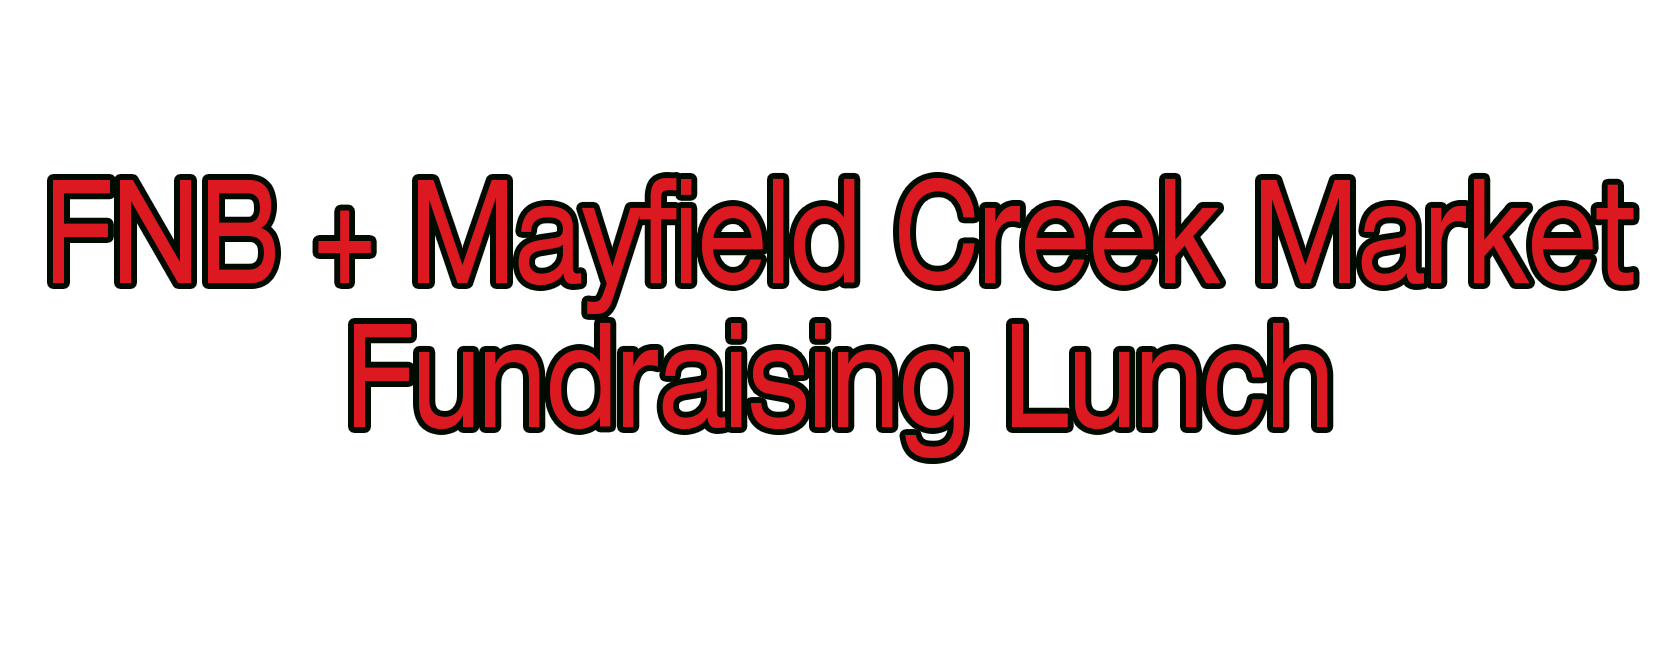 Mayfield Creek Market Fundraising Lunch